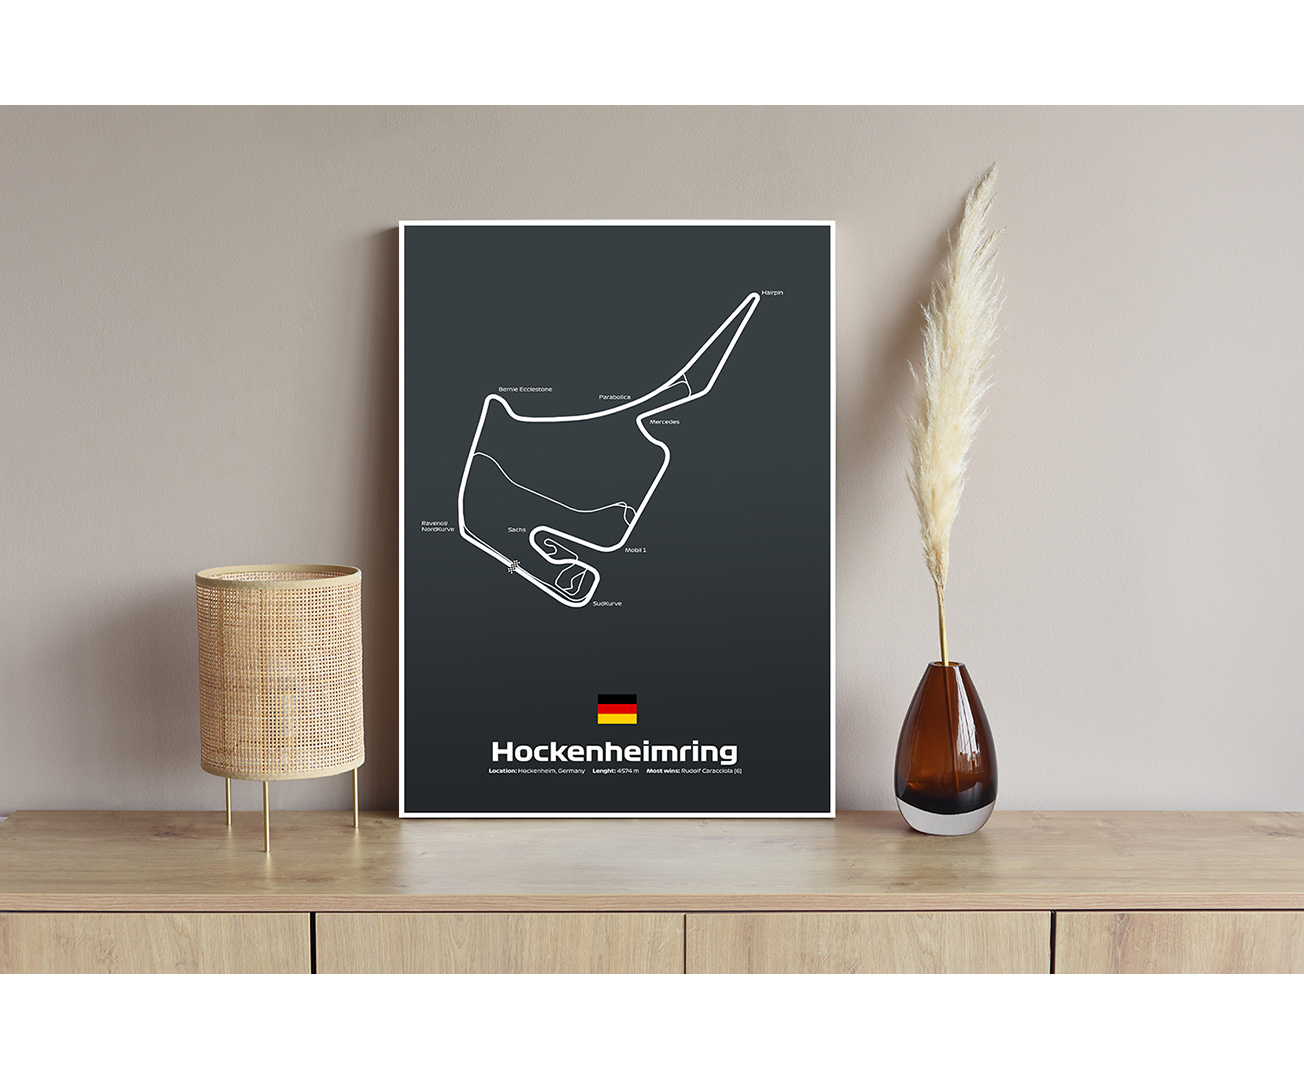 Hockenheimring - Okruh F1 v Nemecku